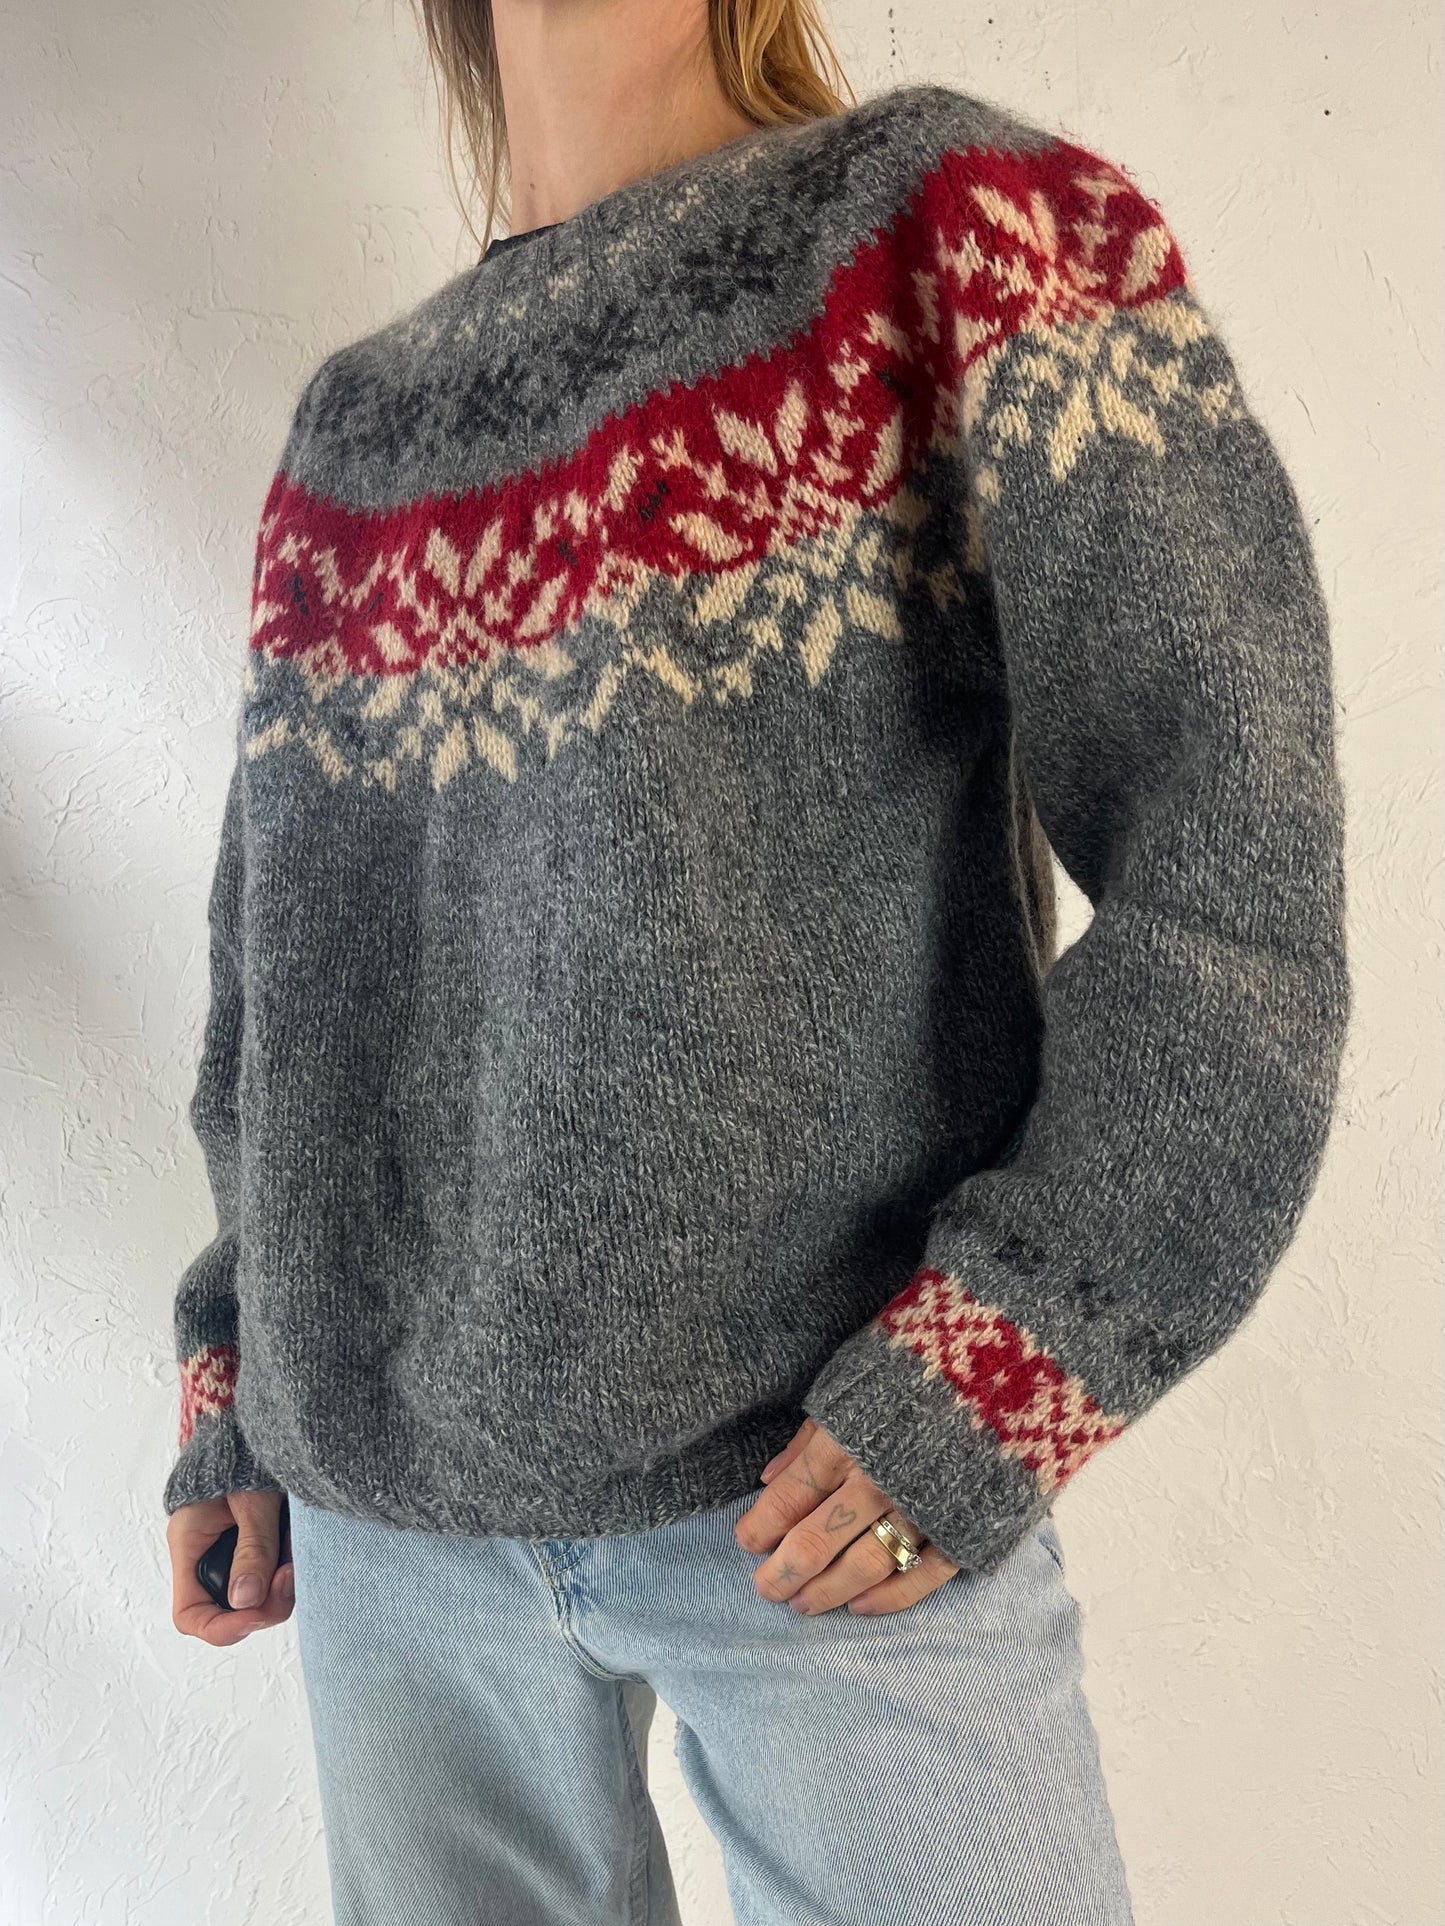 Y2k 'Eddie Bauer' Wool Nylon Knit Ski Sweater / Small